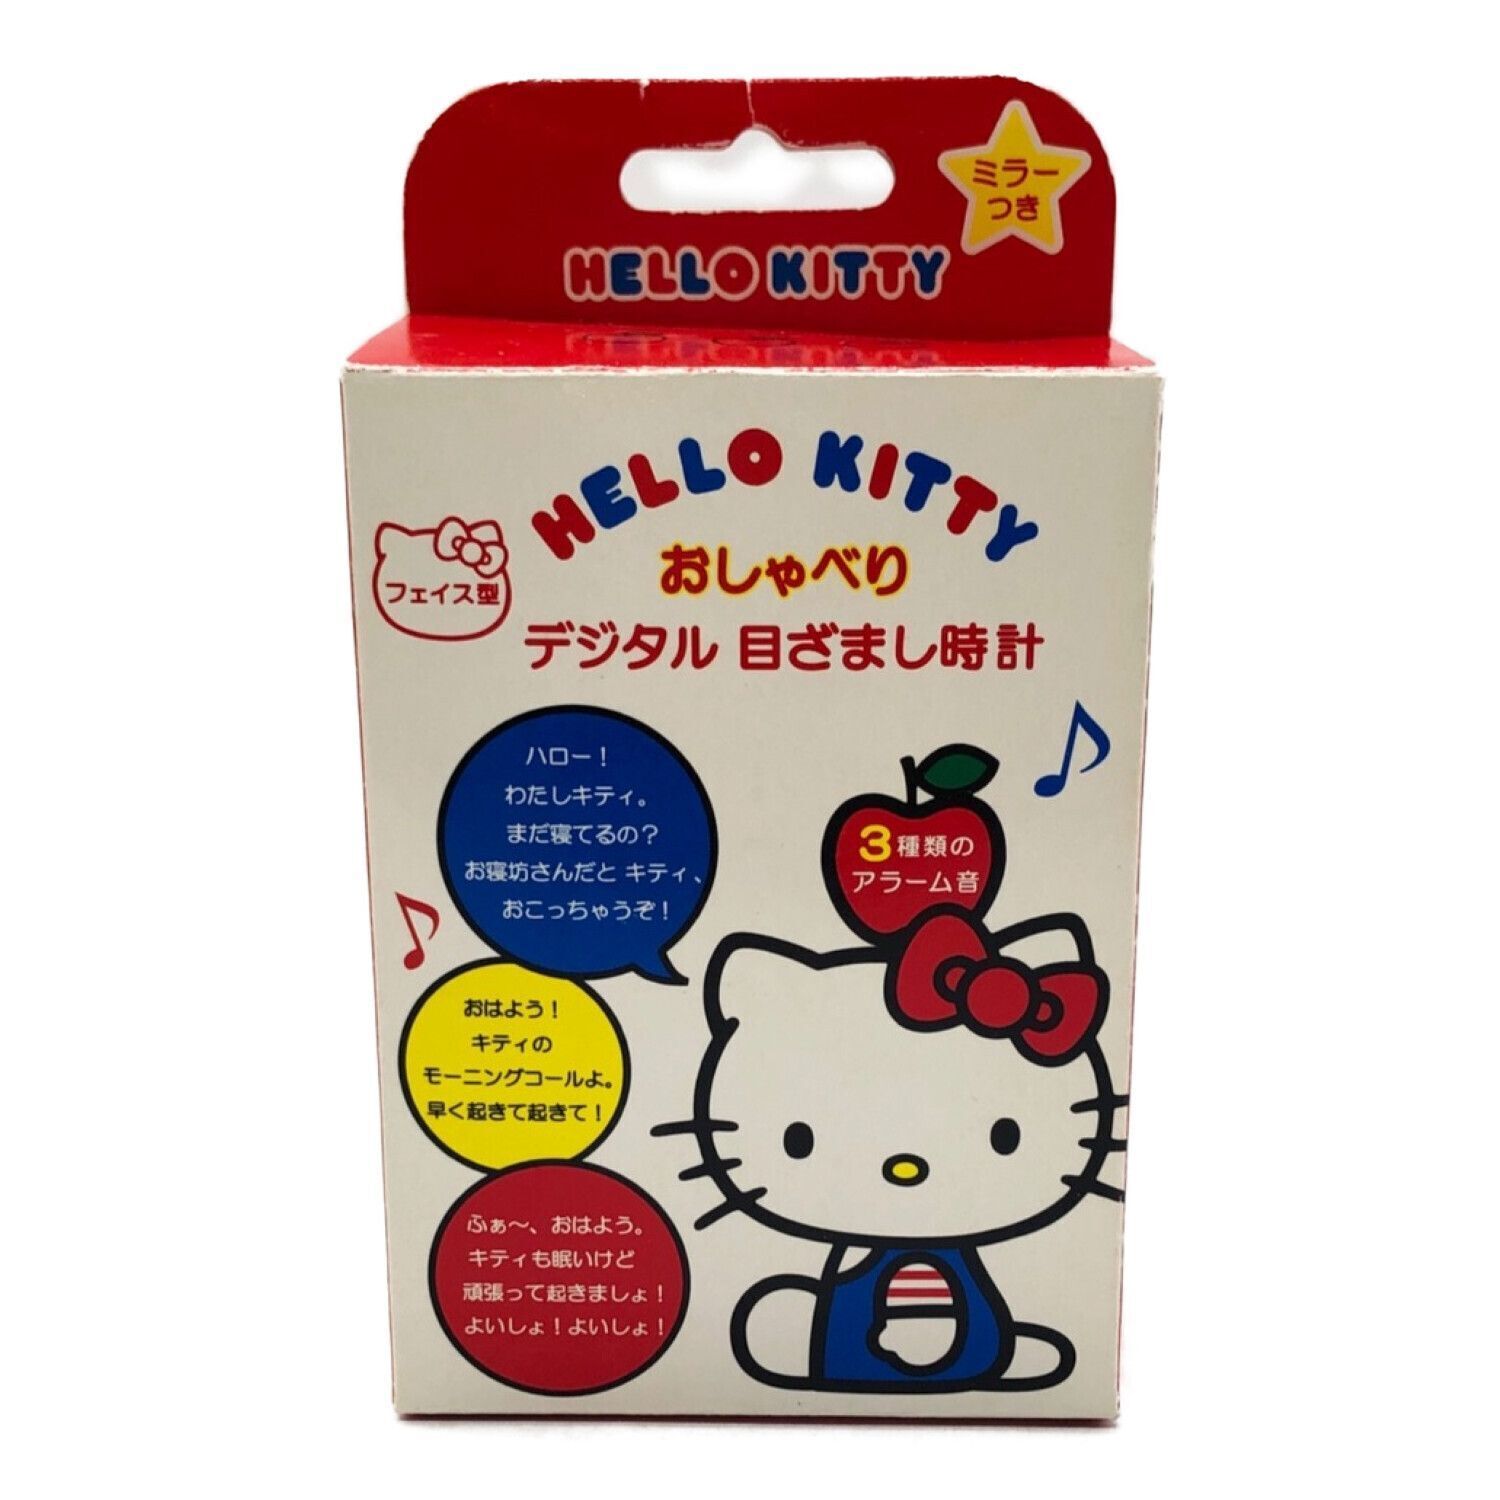 Sanrio Hello Kitty Talking Digital Alarm Clock SEIKO Japan